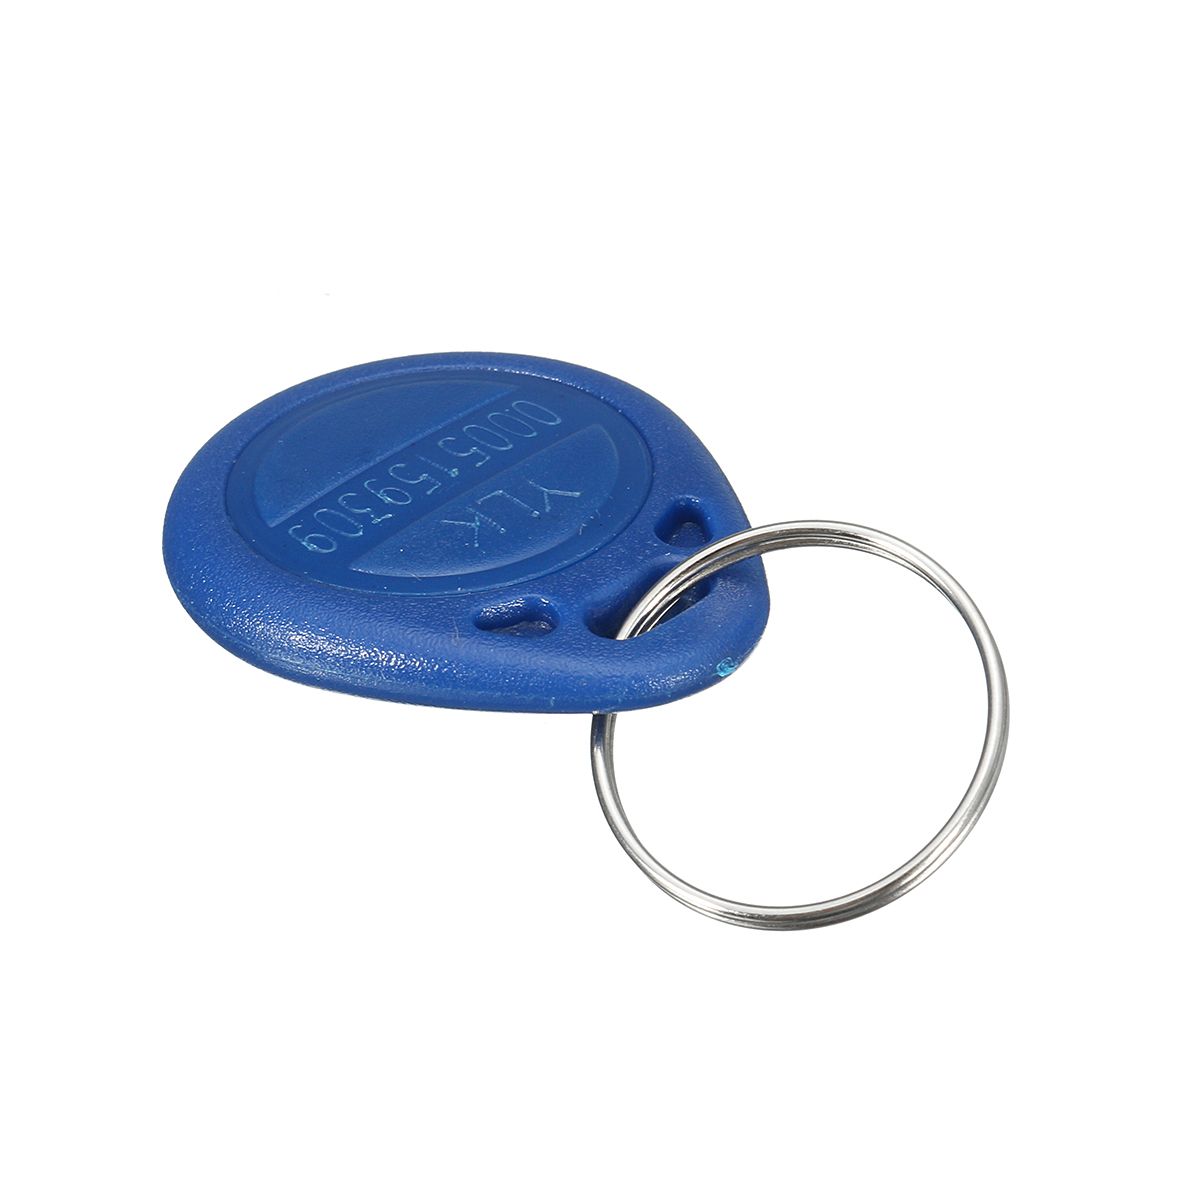 5Pcs-ID-Keyfbobs-RFID-Tag-Key-Ring-Card-125KHZ-Proximity-Token-Access-Control-Attendance-TK4100-1147675